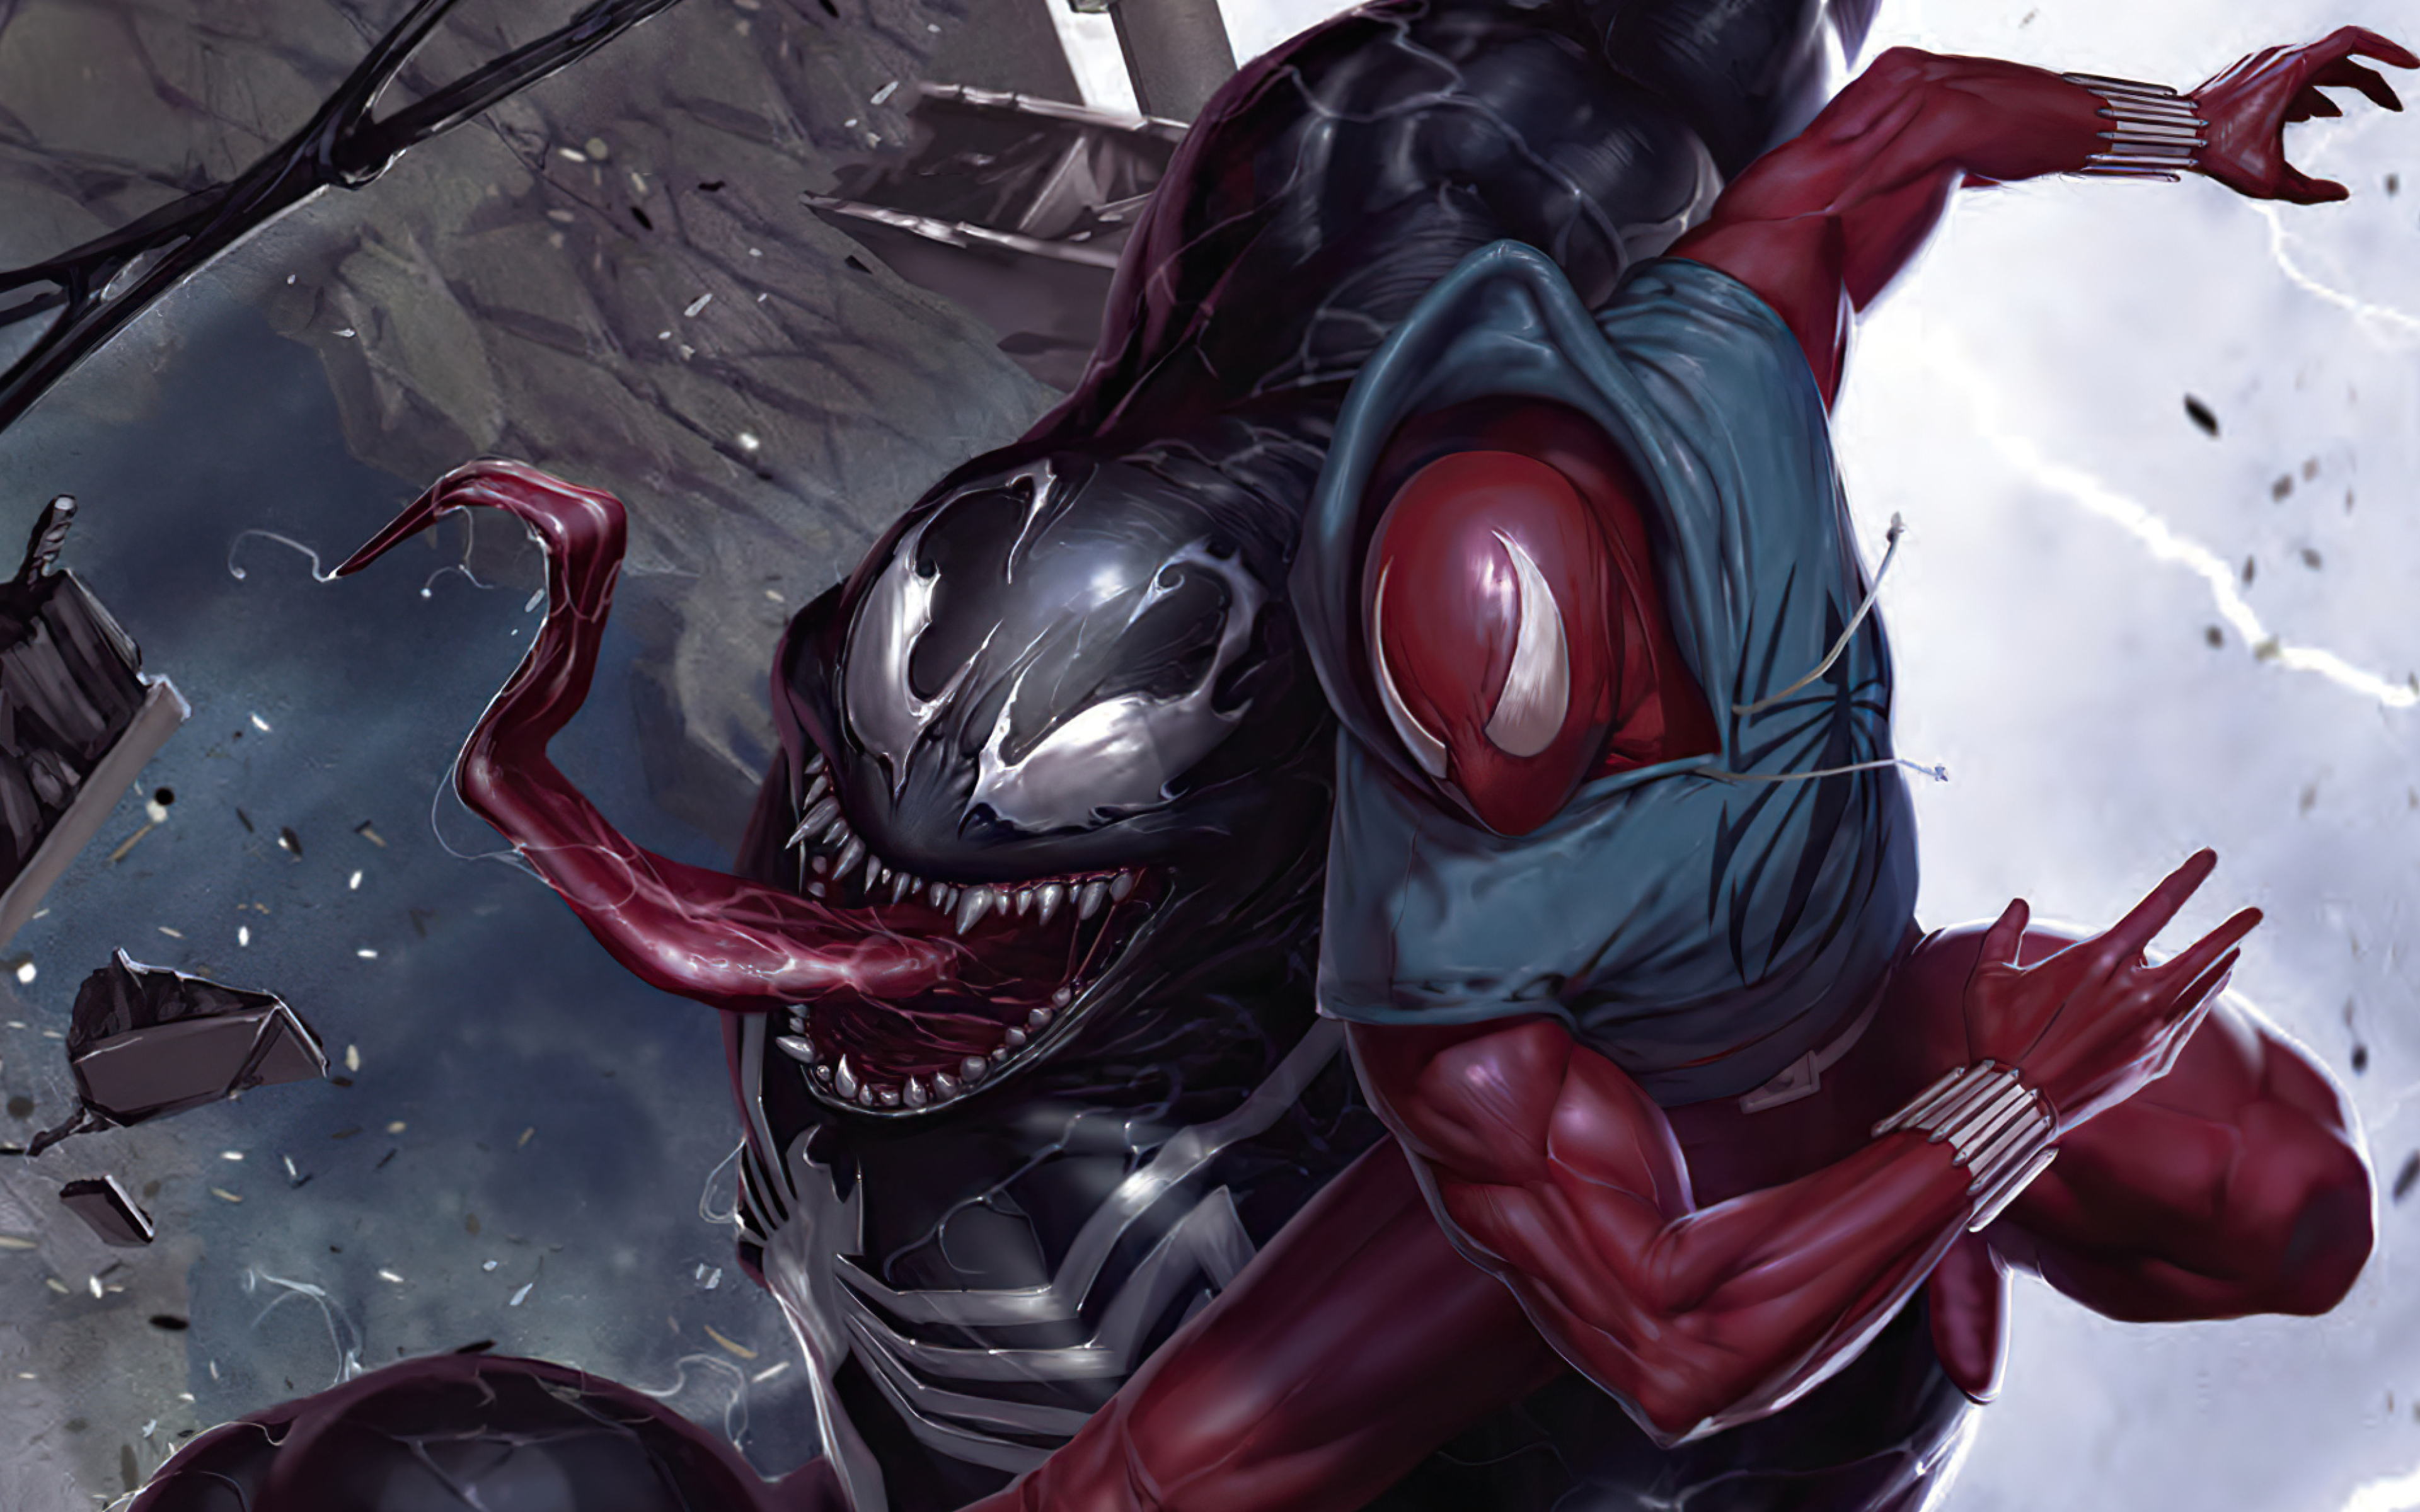 Spiderman Vs Venom Hd Superheroes 4k Wallpapers Images Backgrounds Images